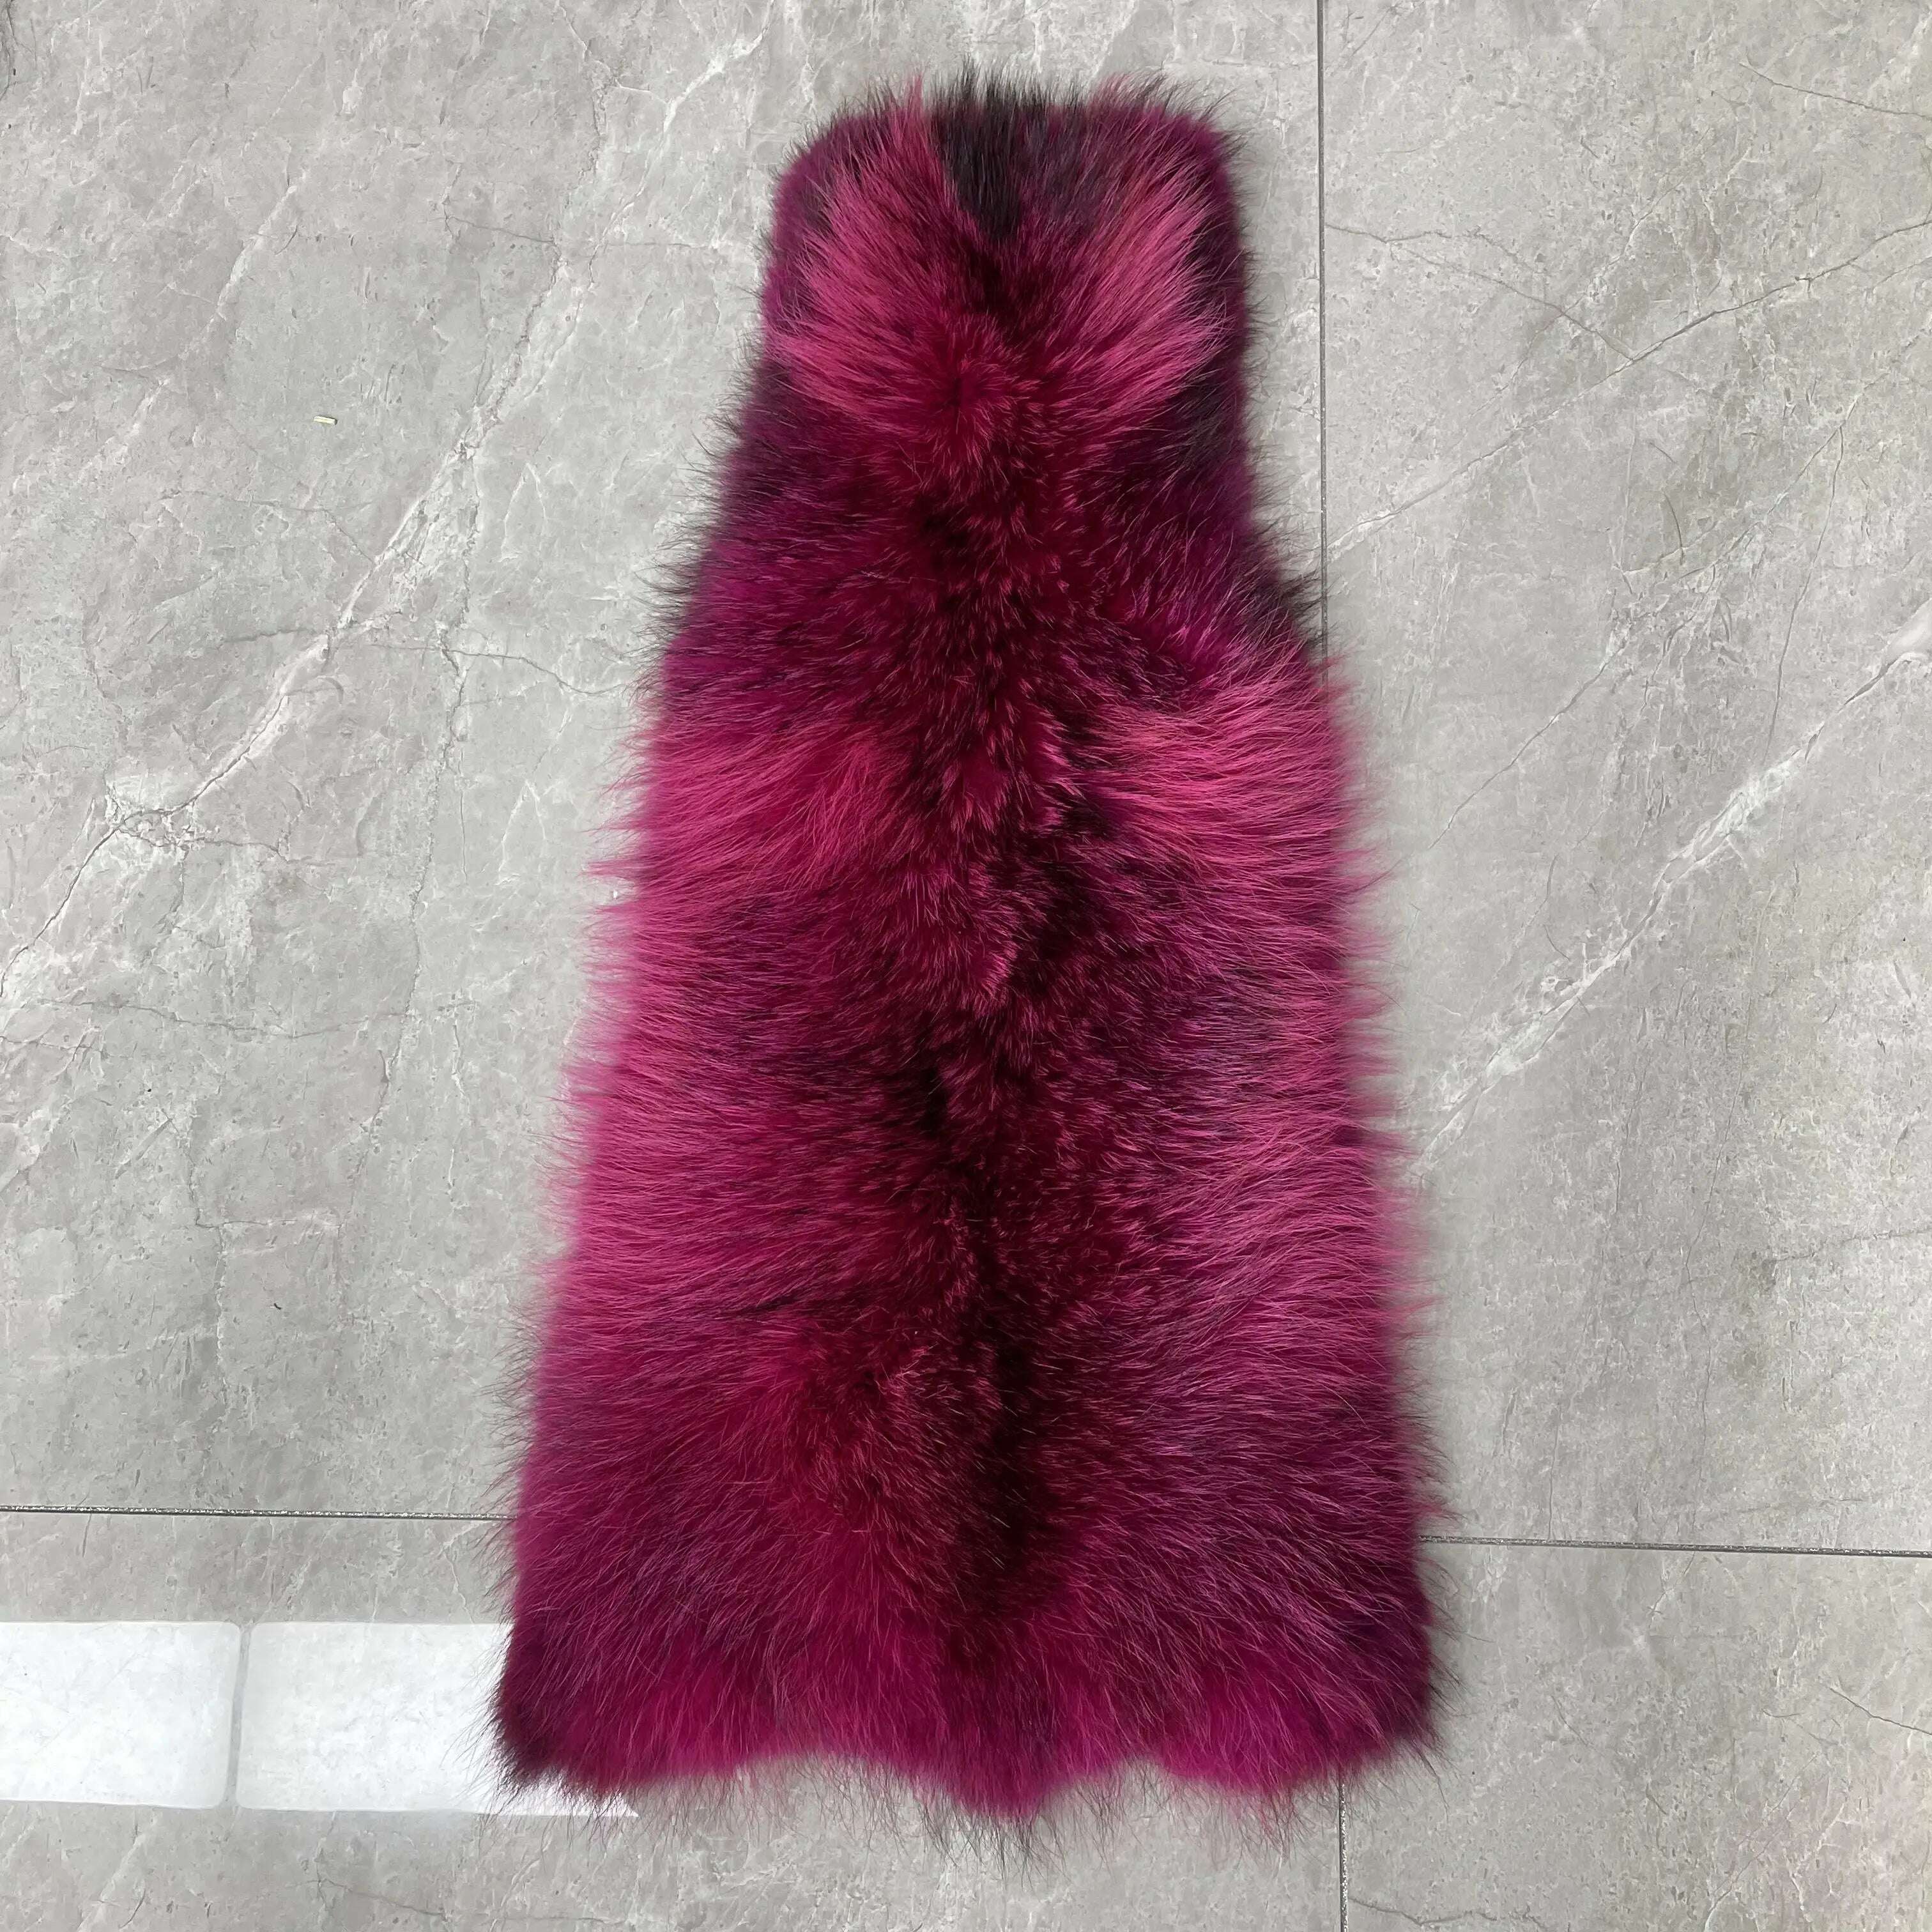 KIMLUD, Wholeskin Men Golden Fox Fur Long Coats Shawl Collar Winter Overcoats Genuine Natural Fox Furs Jacket, Hot Pink / XS(88cm), KIMLUD Womens Clothes